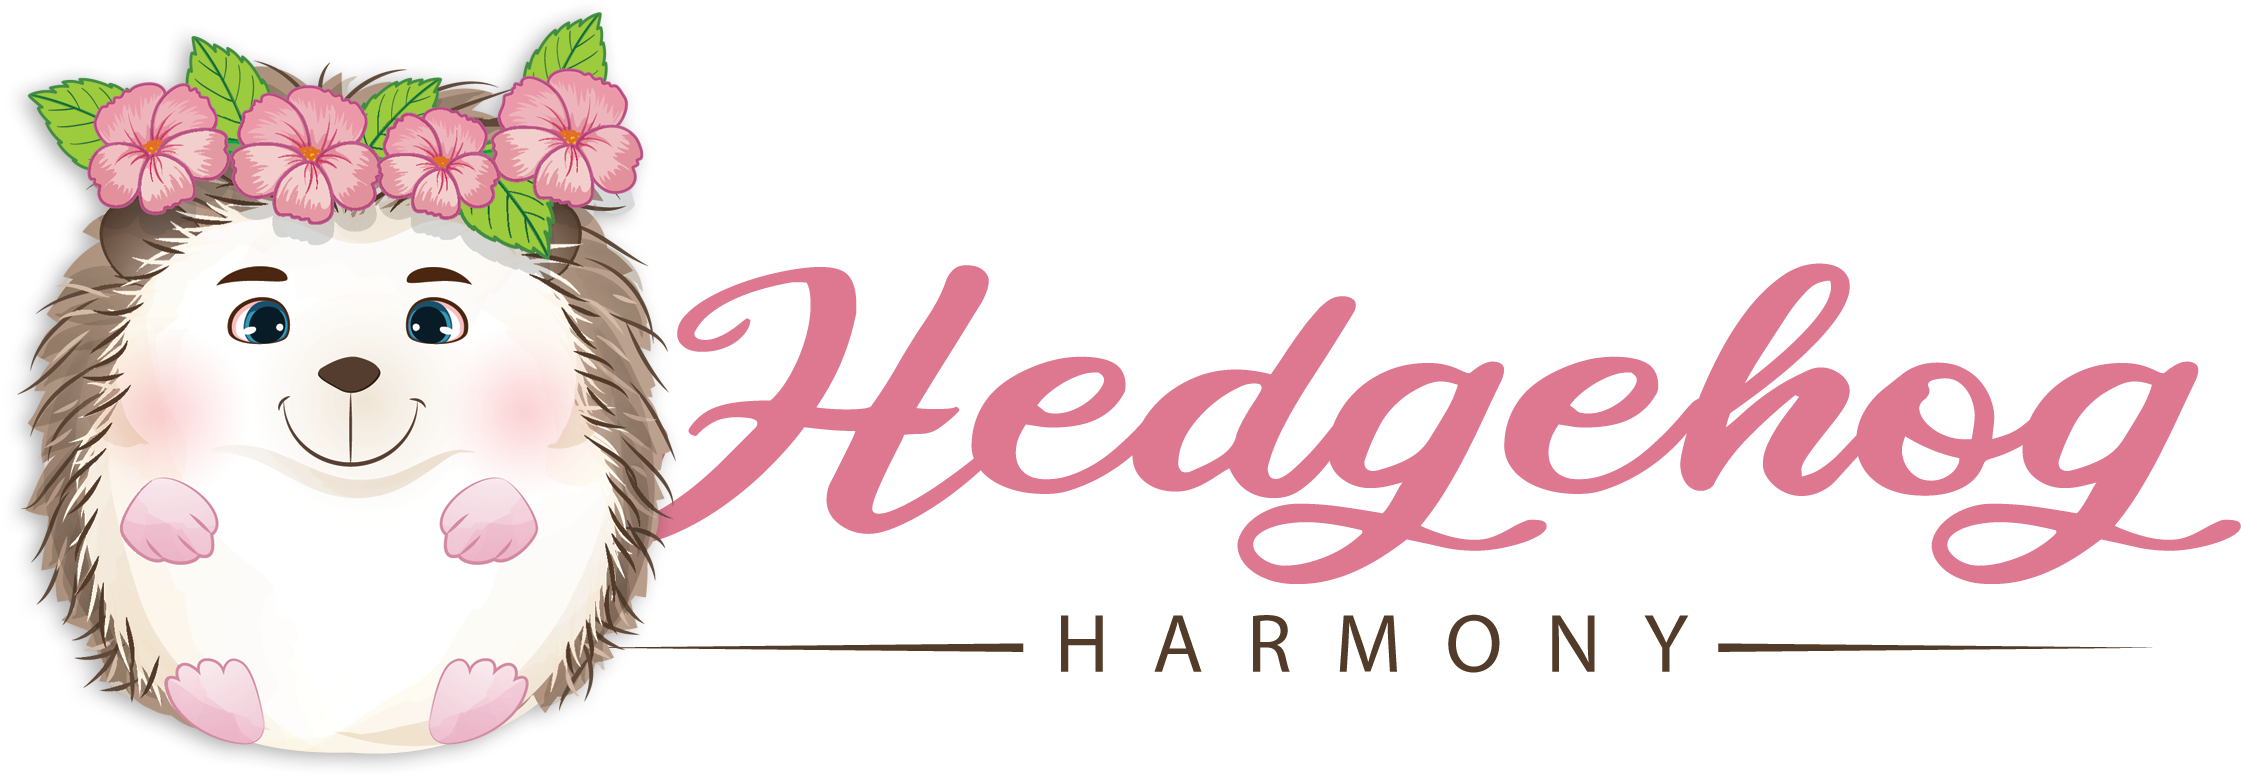 Hedgehog Harmony